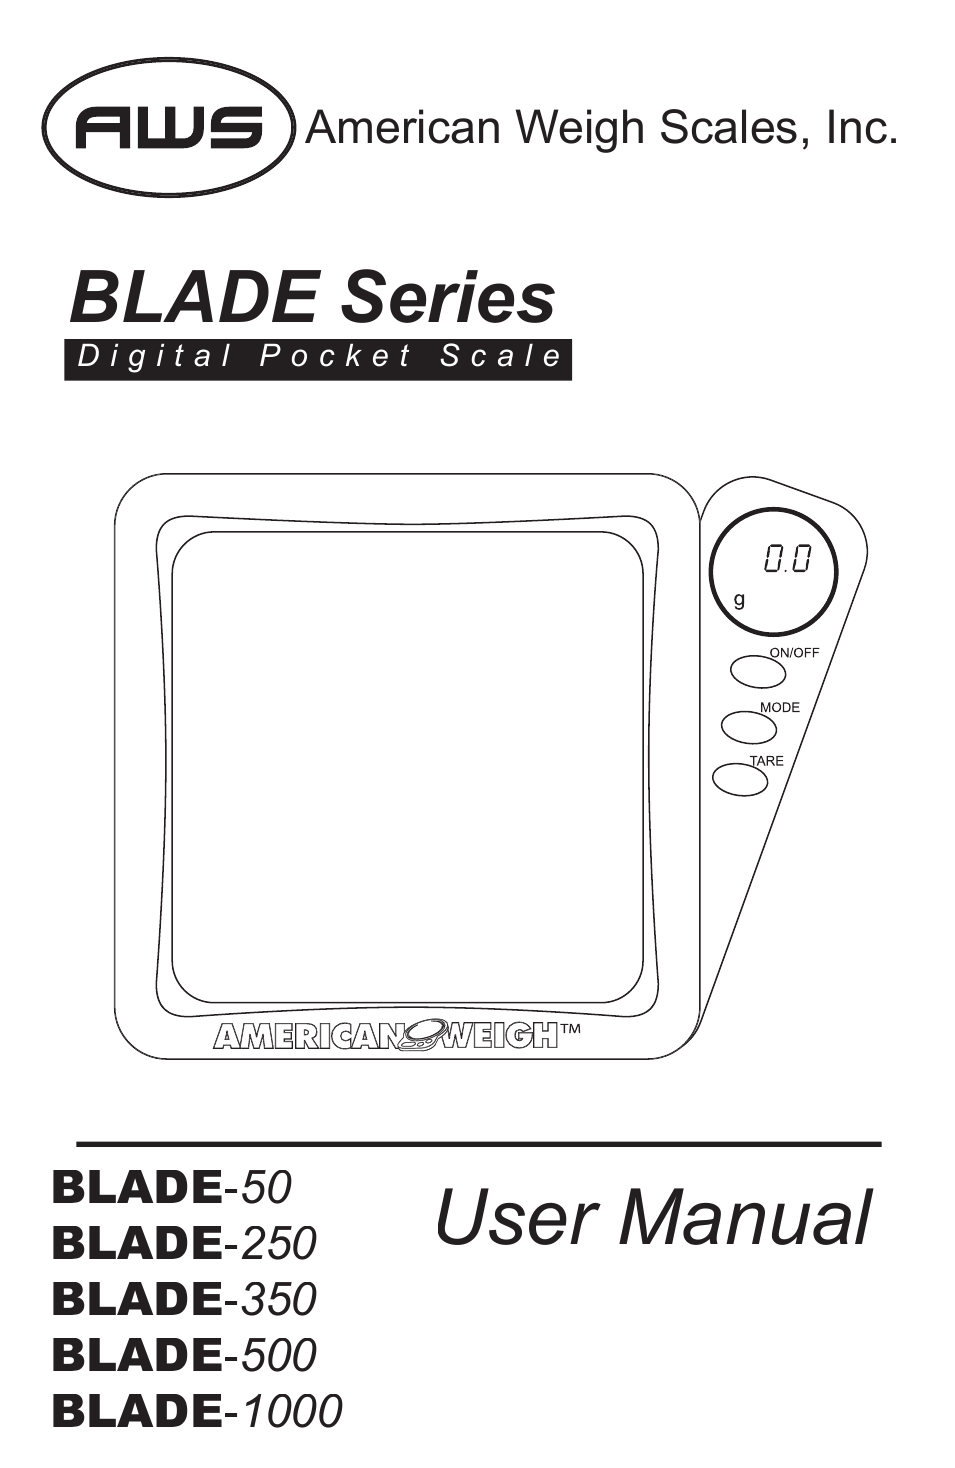 Blade-500